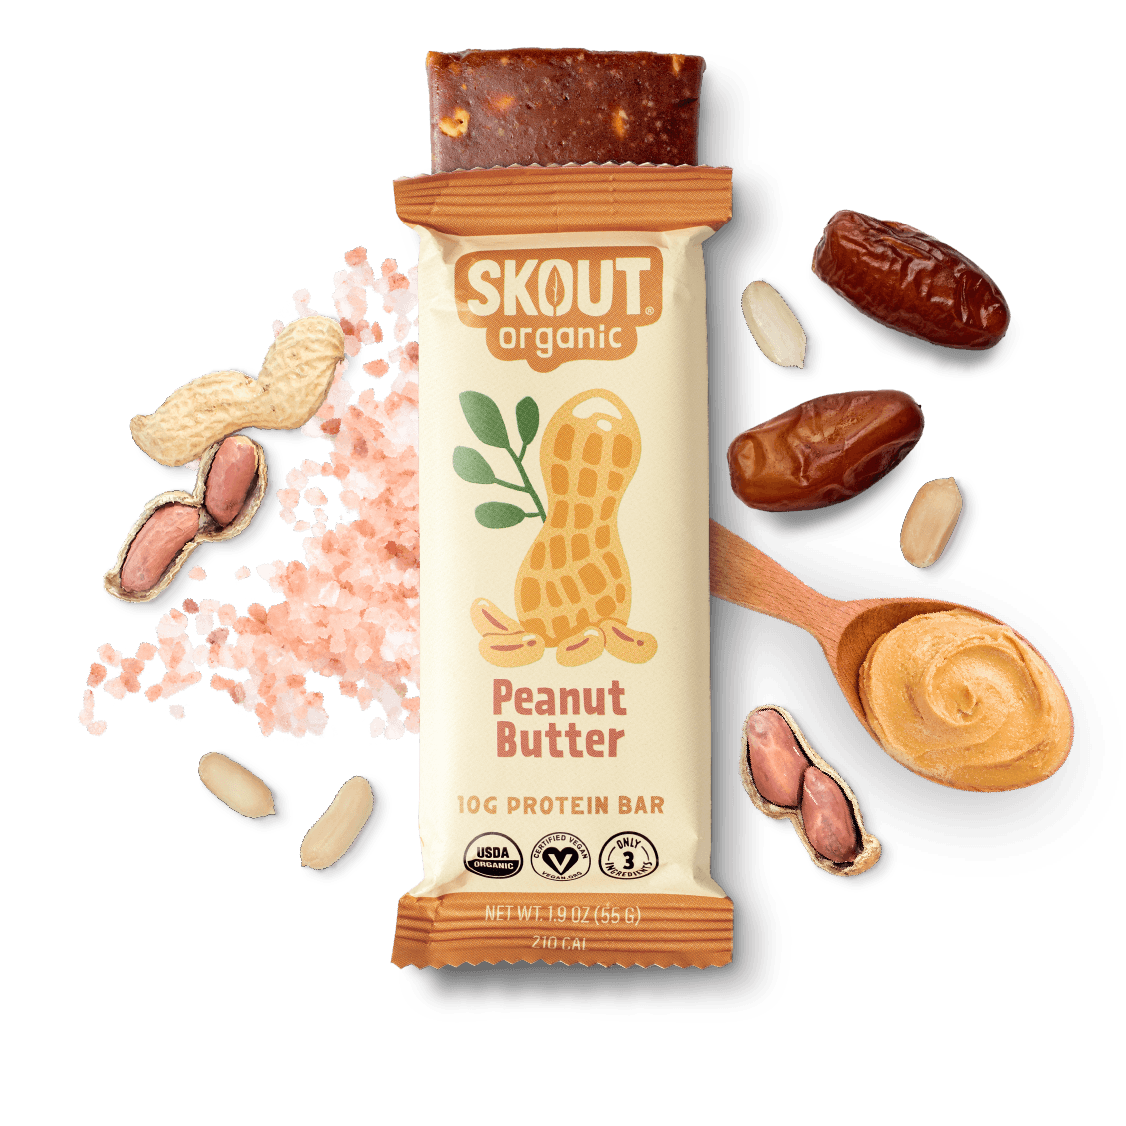 Skout Organic Peanut Butter Protein Bar by Skout Organic